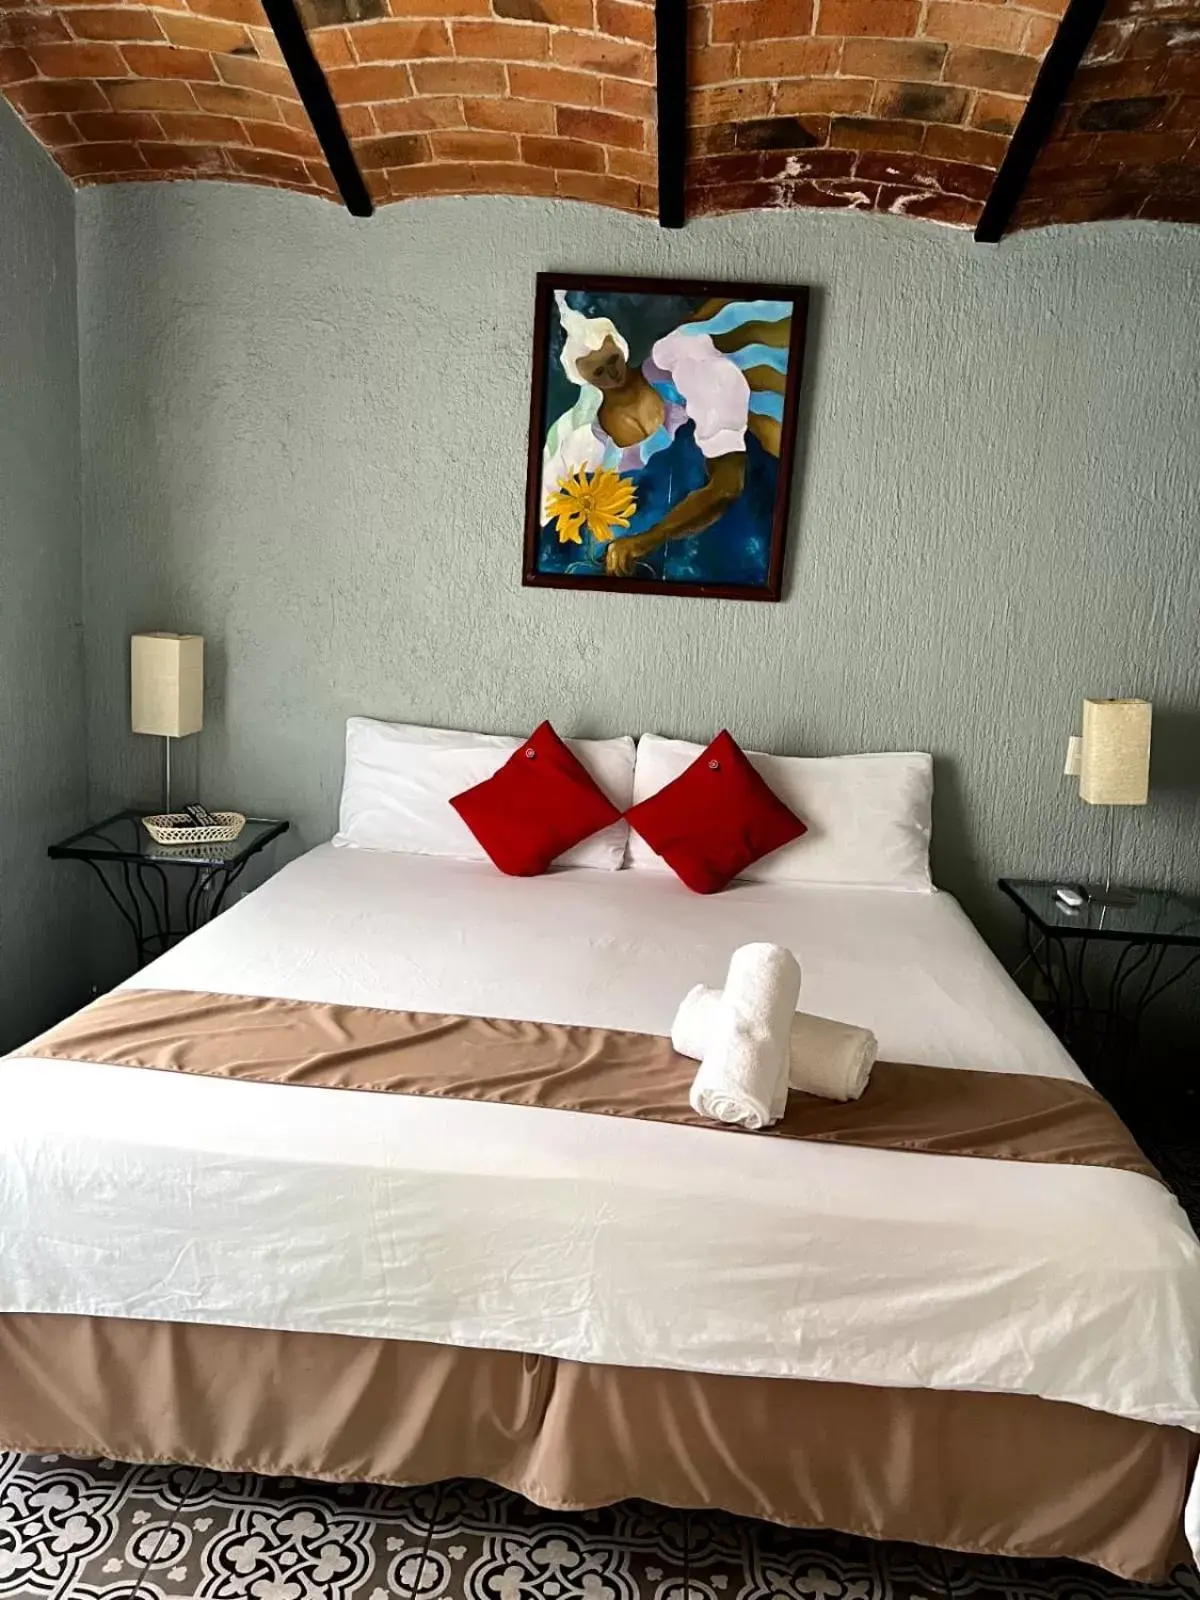 Bedroom, Bed in Hotel Villas Ajijic, Ajijic Chapala Jalisco